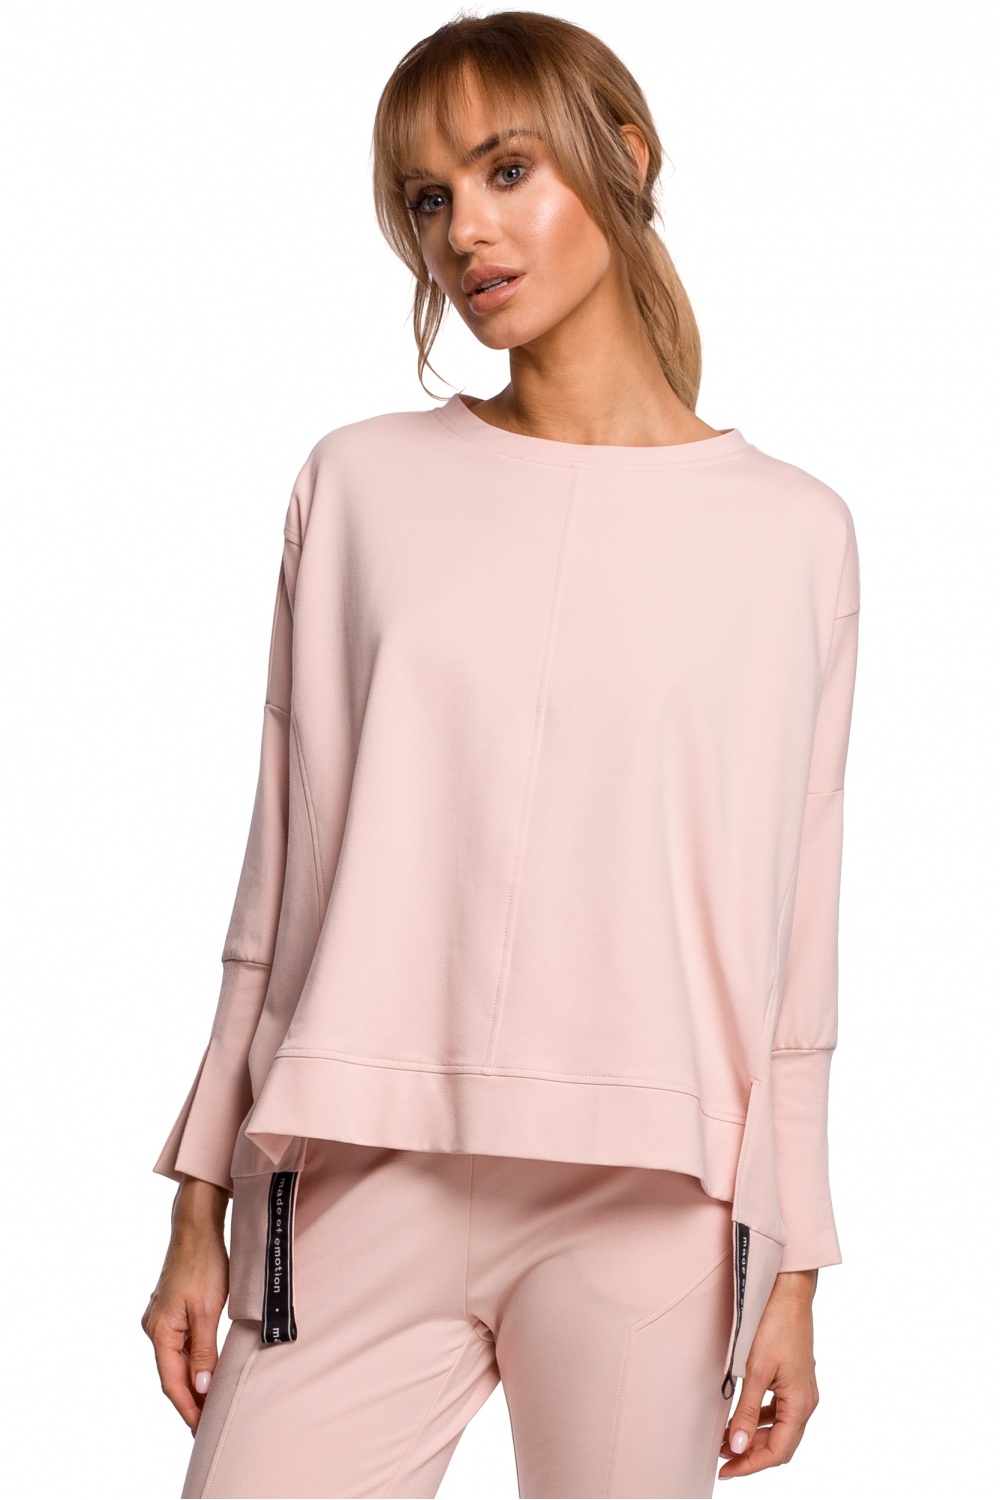  Sweatshirt model 142282 Moe  pink